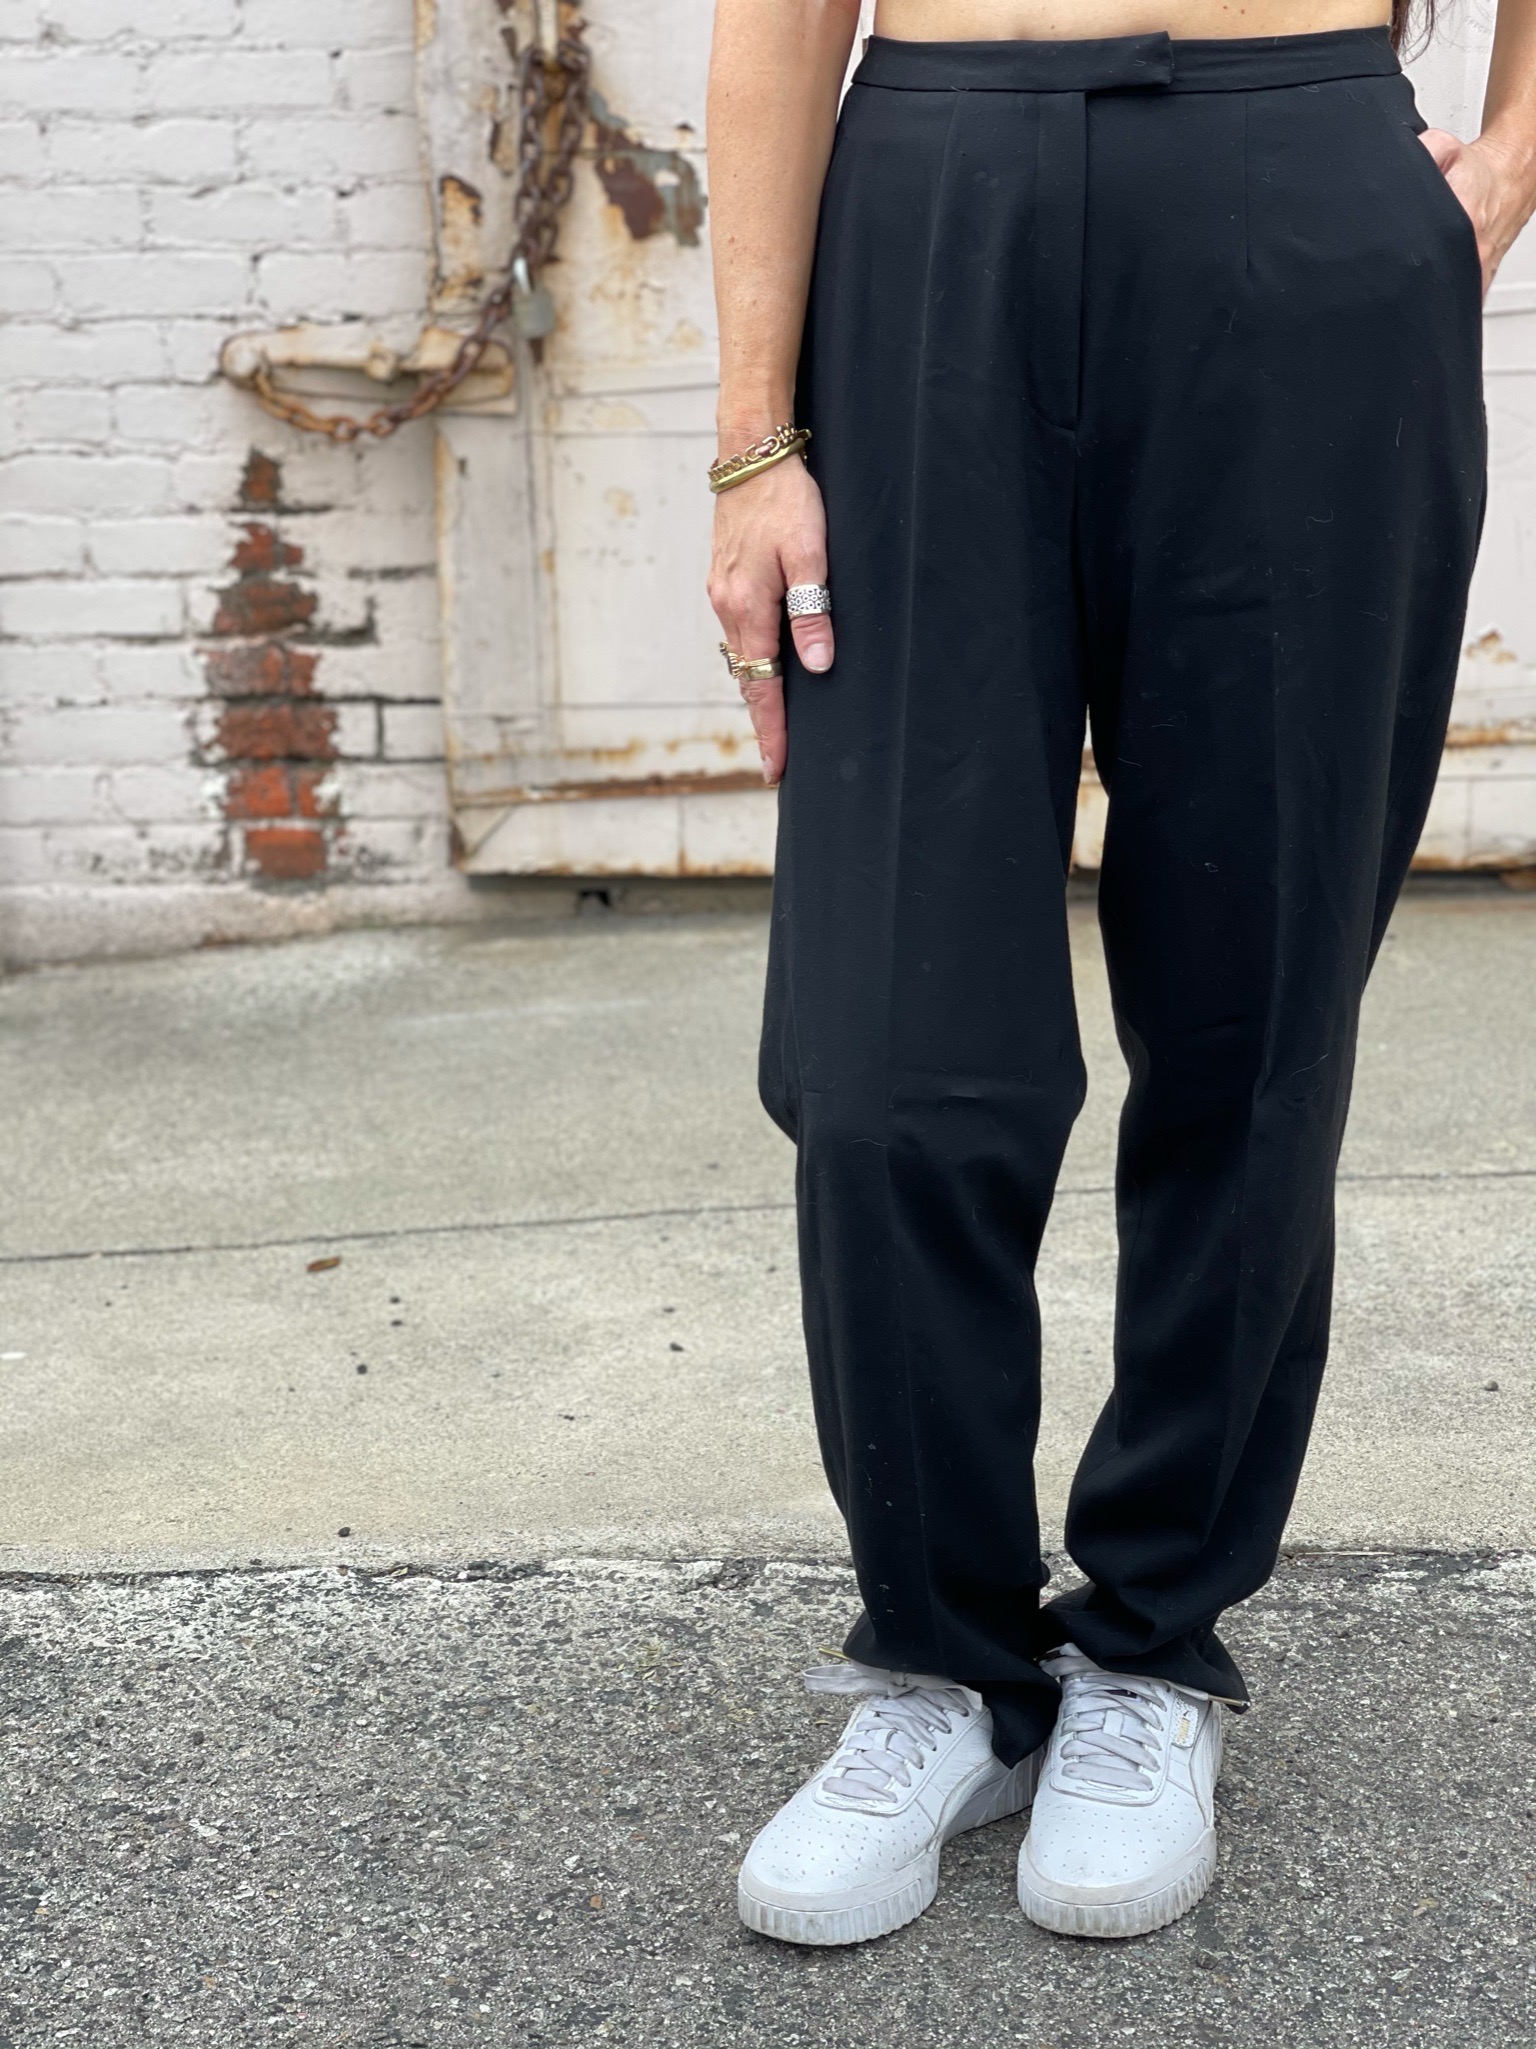 80s Black High Waisted Pants - Medium